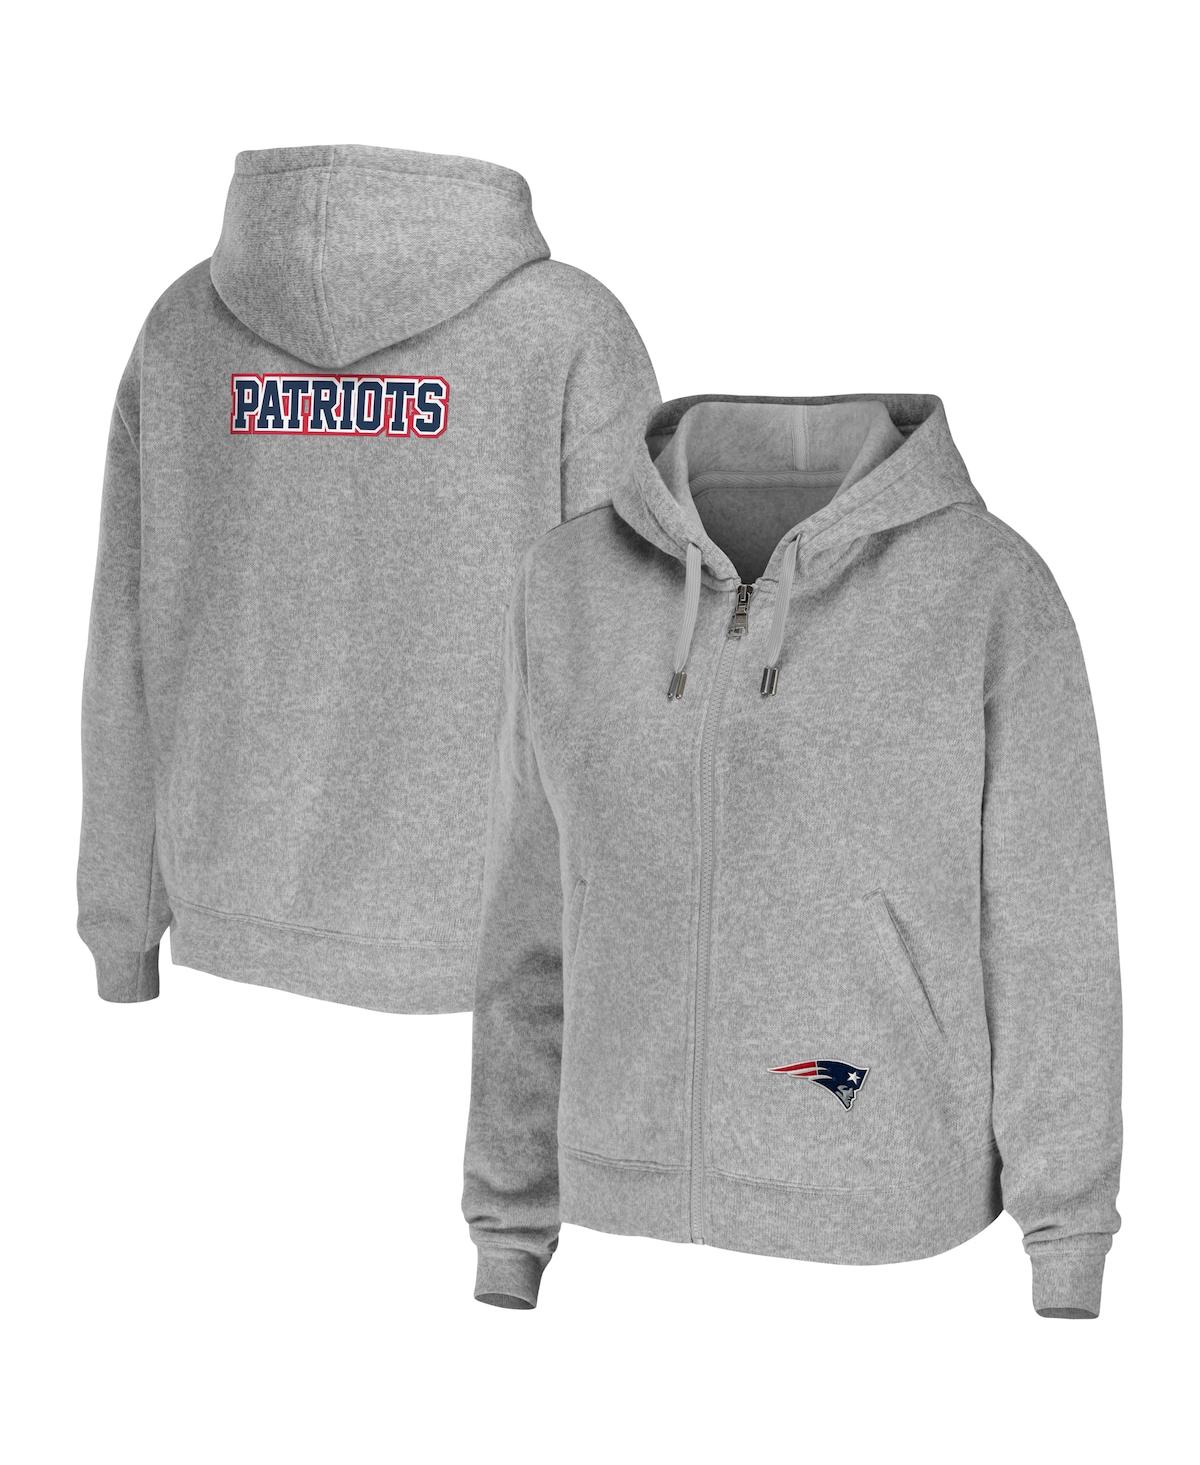 Shop Wear By Erin Andrews Women's  Heathered Gray New England Patriots Team Full-zip Hoodie